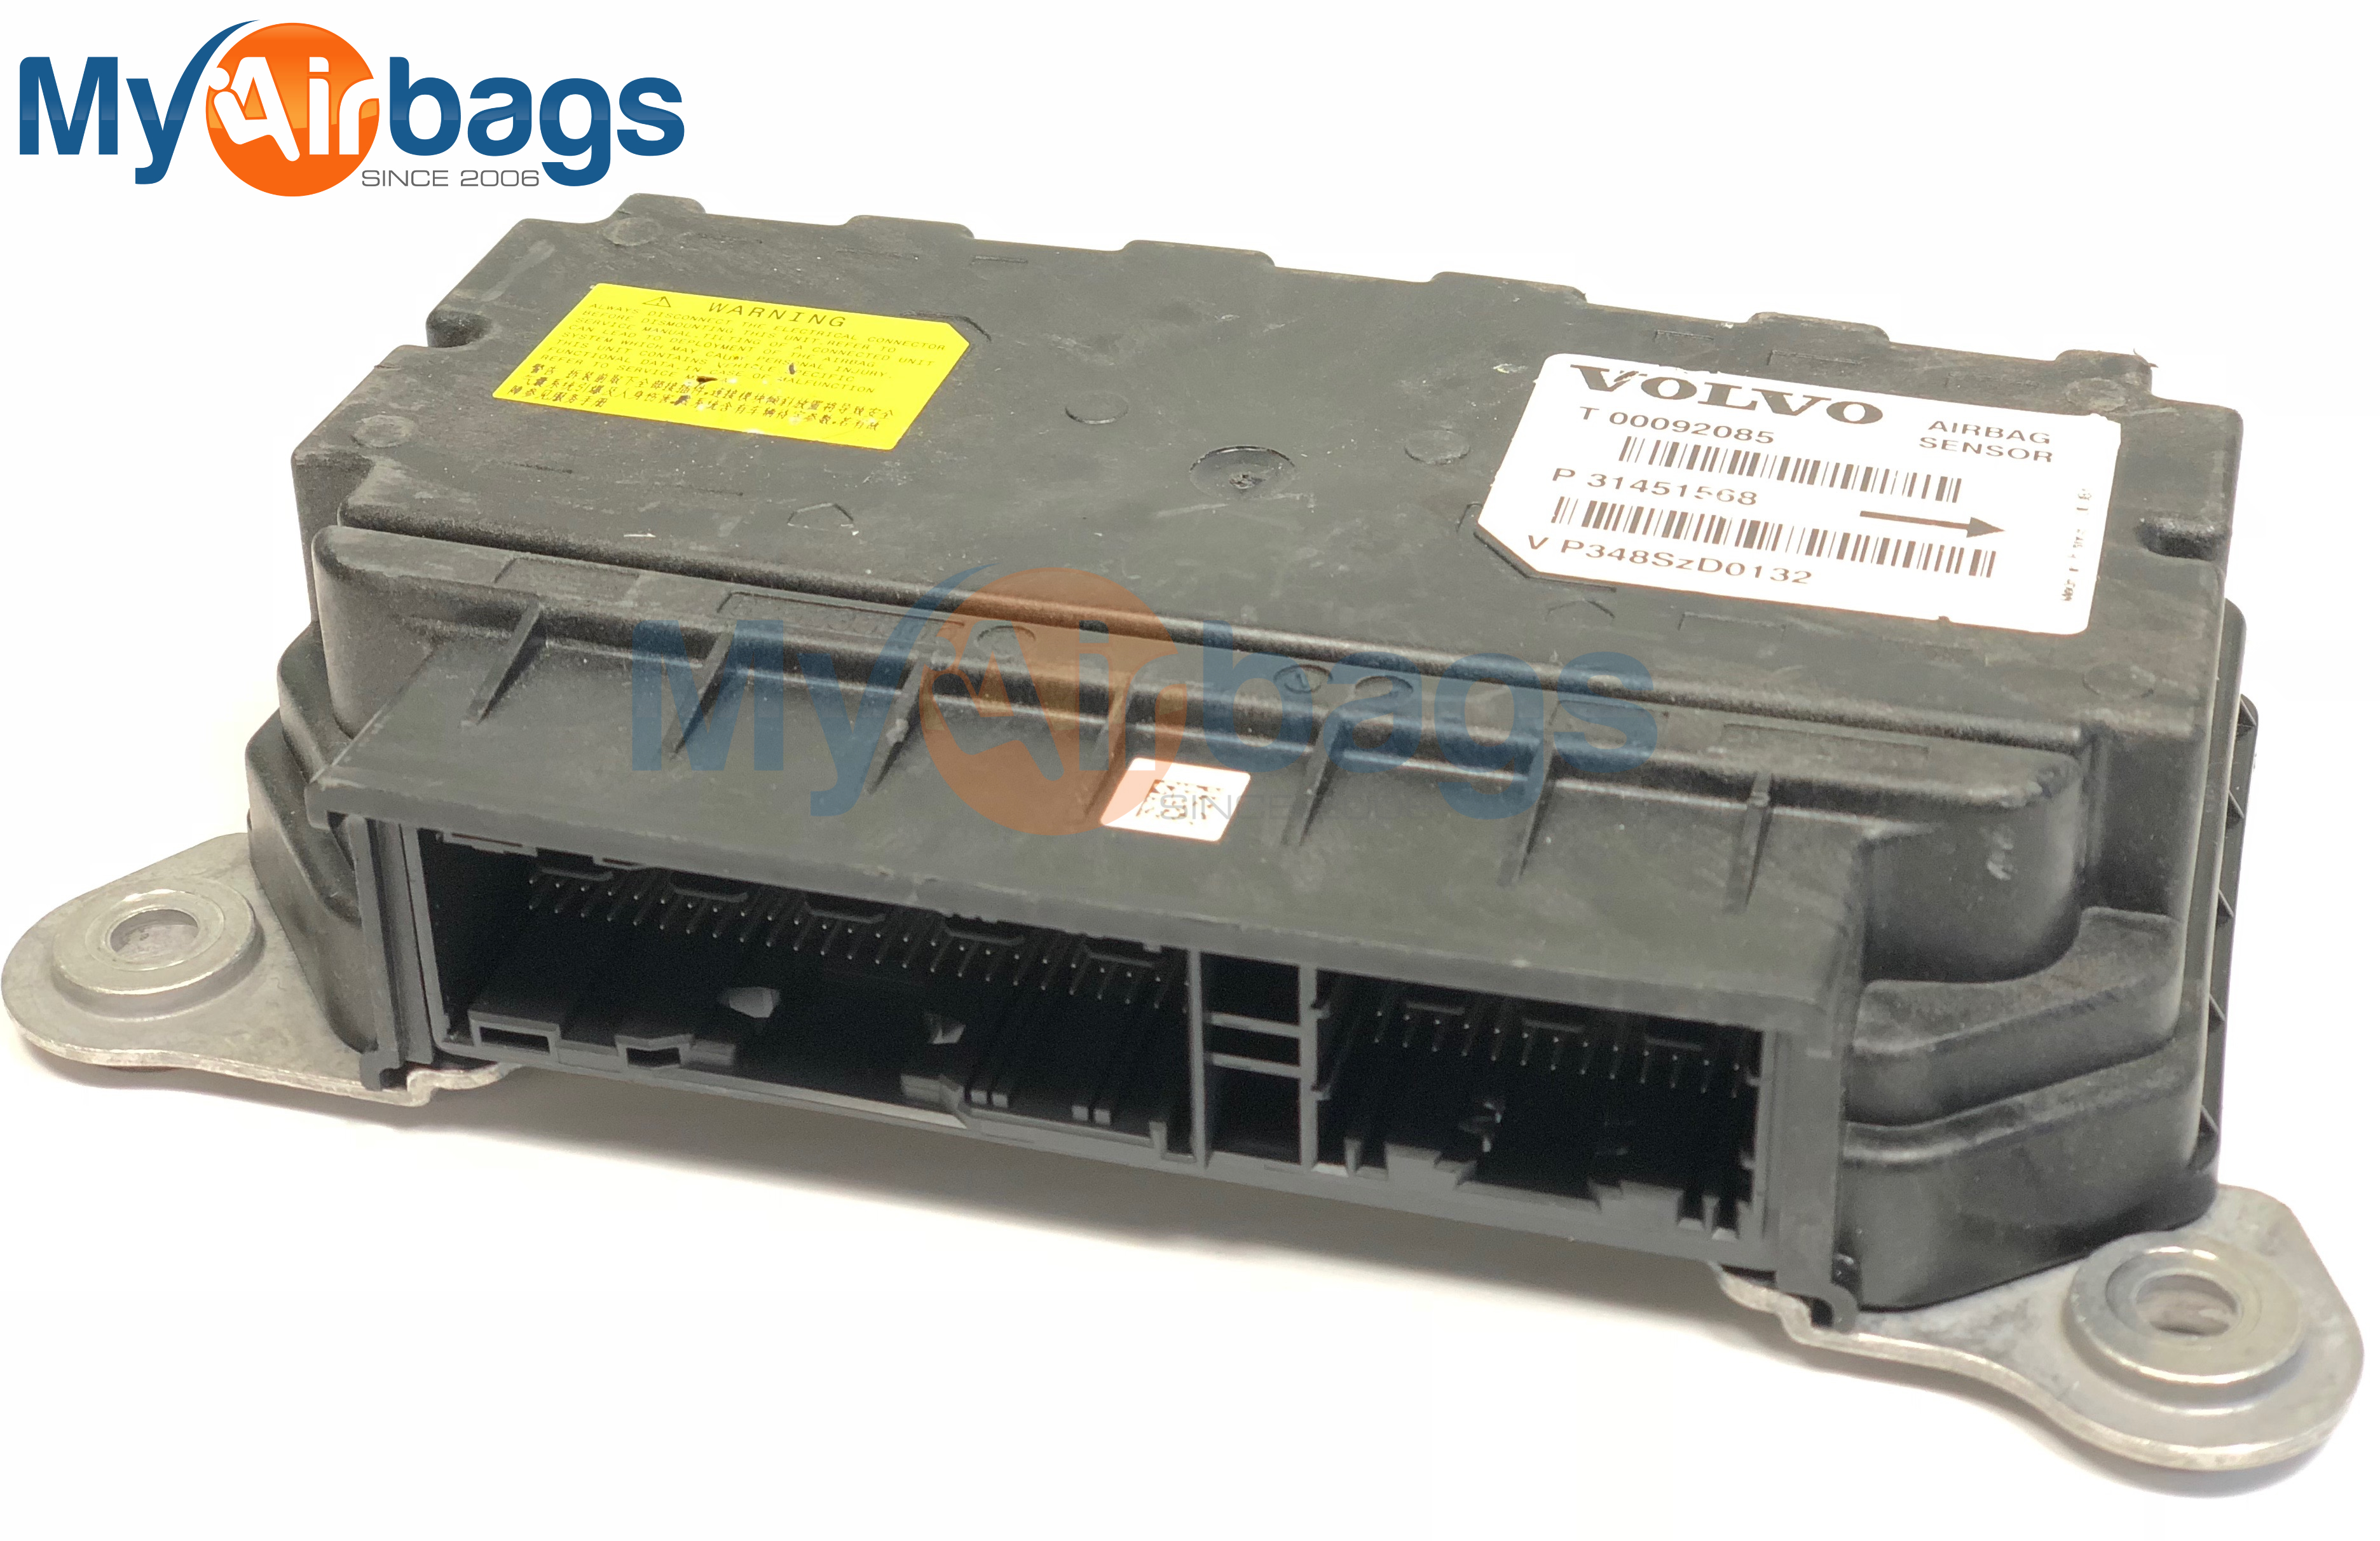 VOLVO XC90 SRS Airbag Computer Diagnostic Control Module PART #P31451568